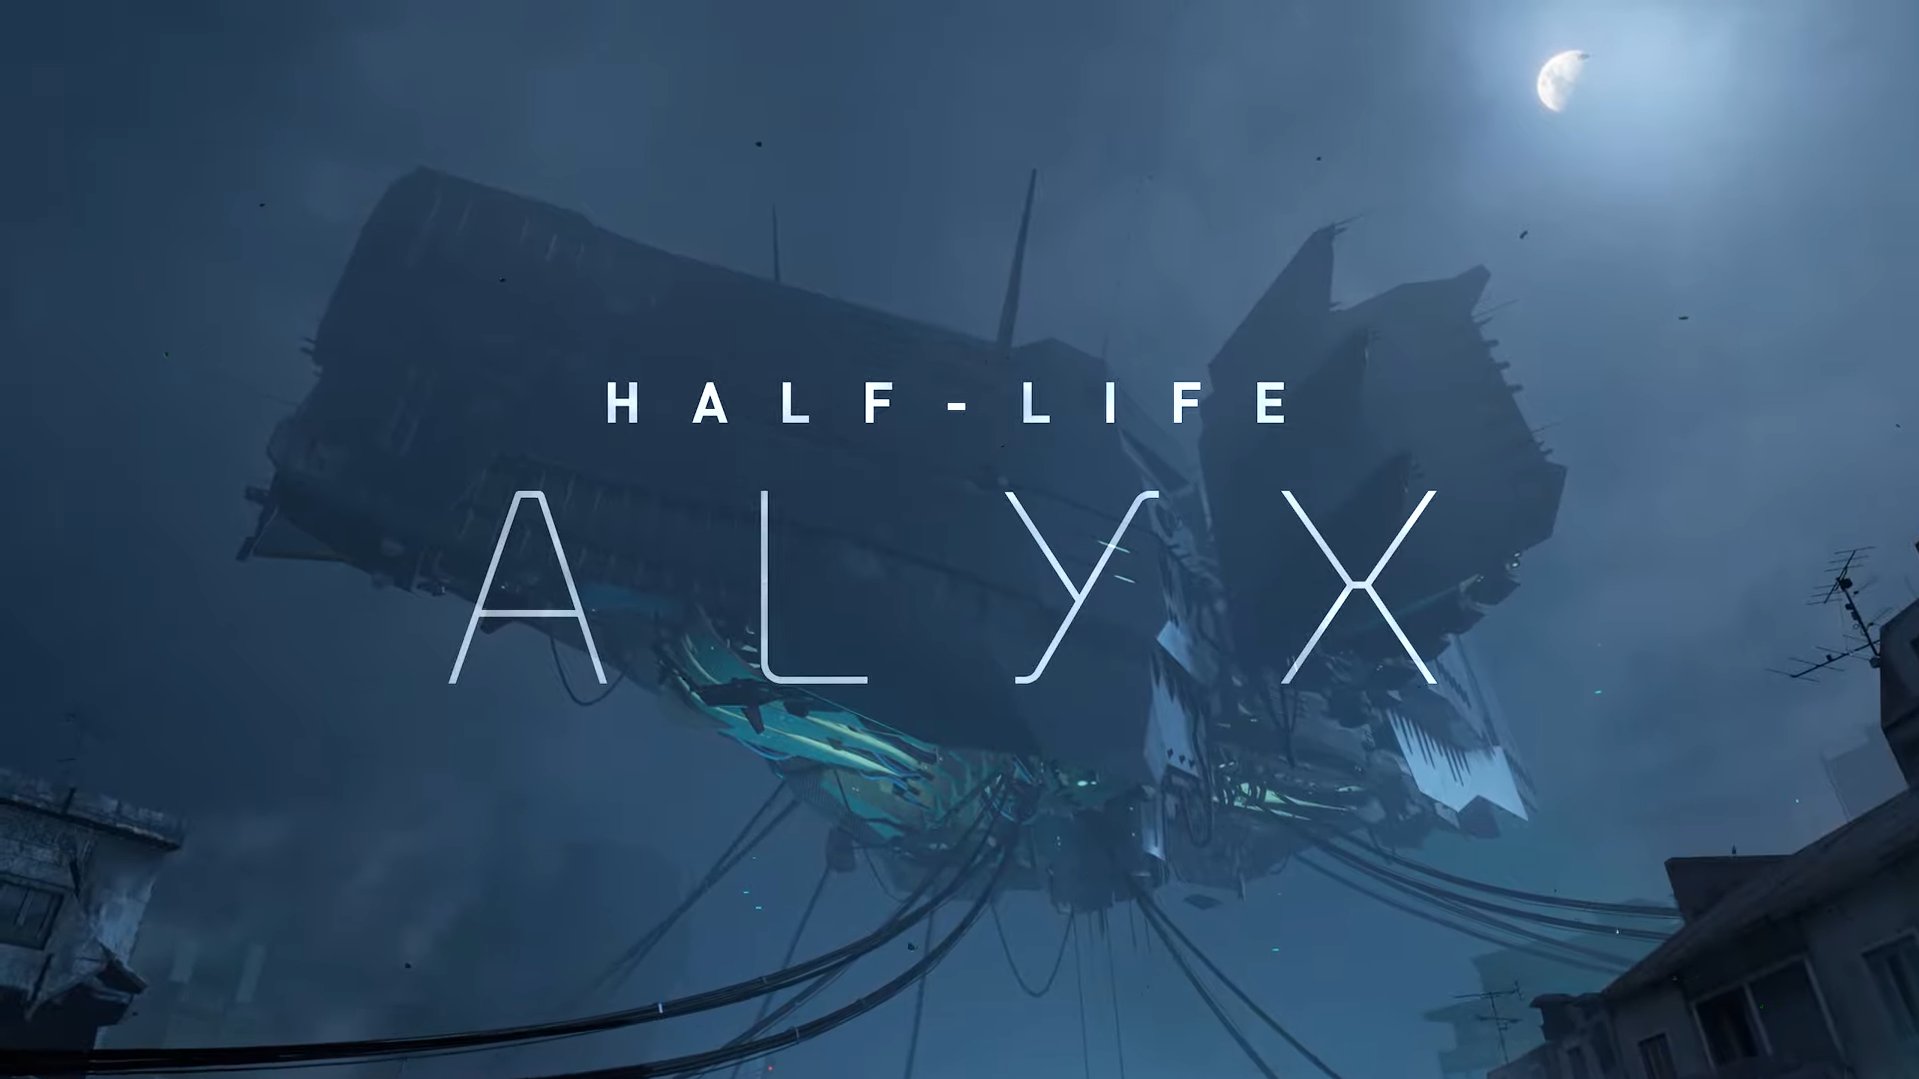 half life alyx title on screen